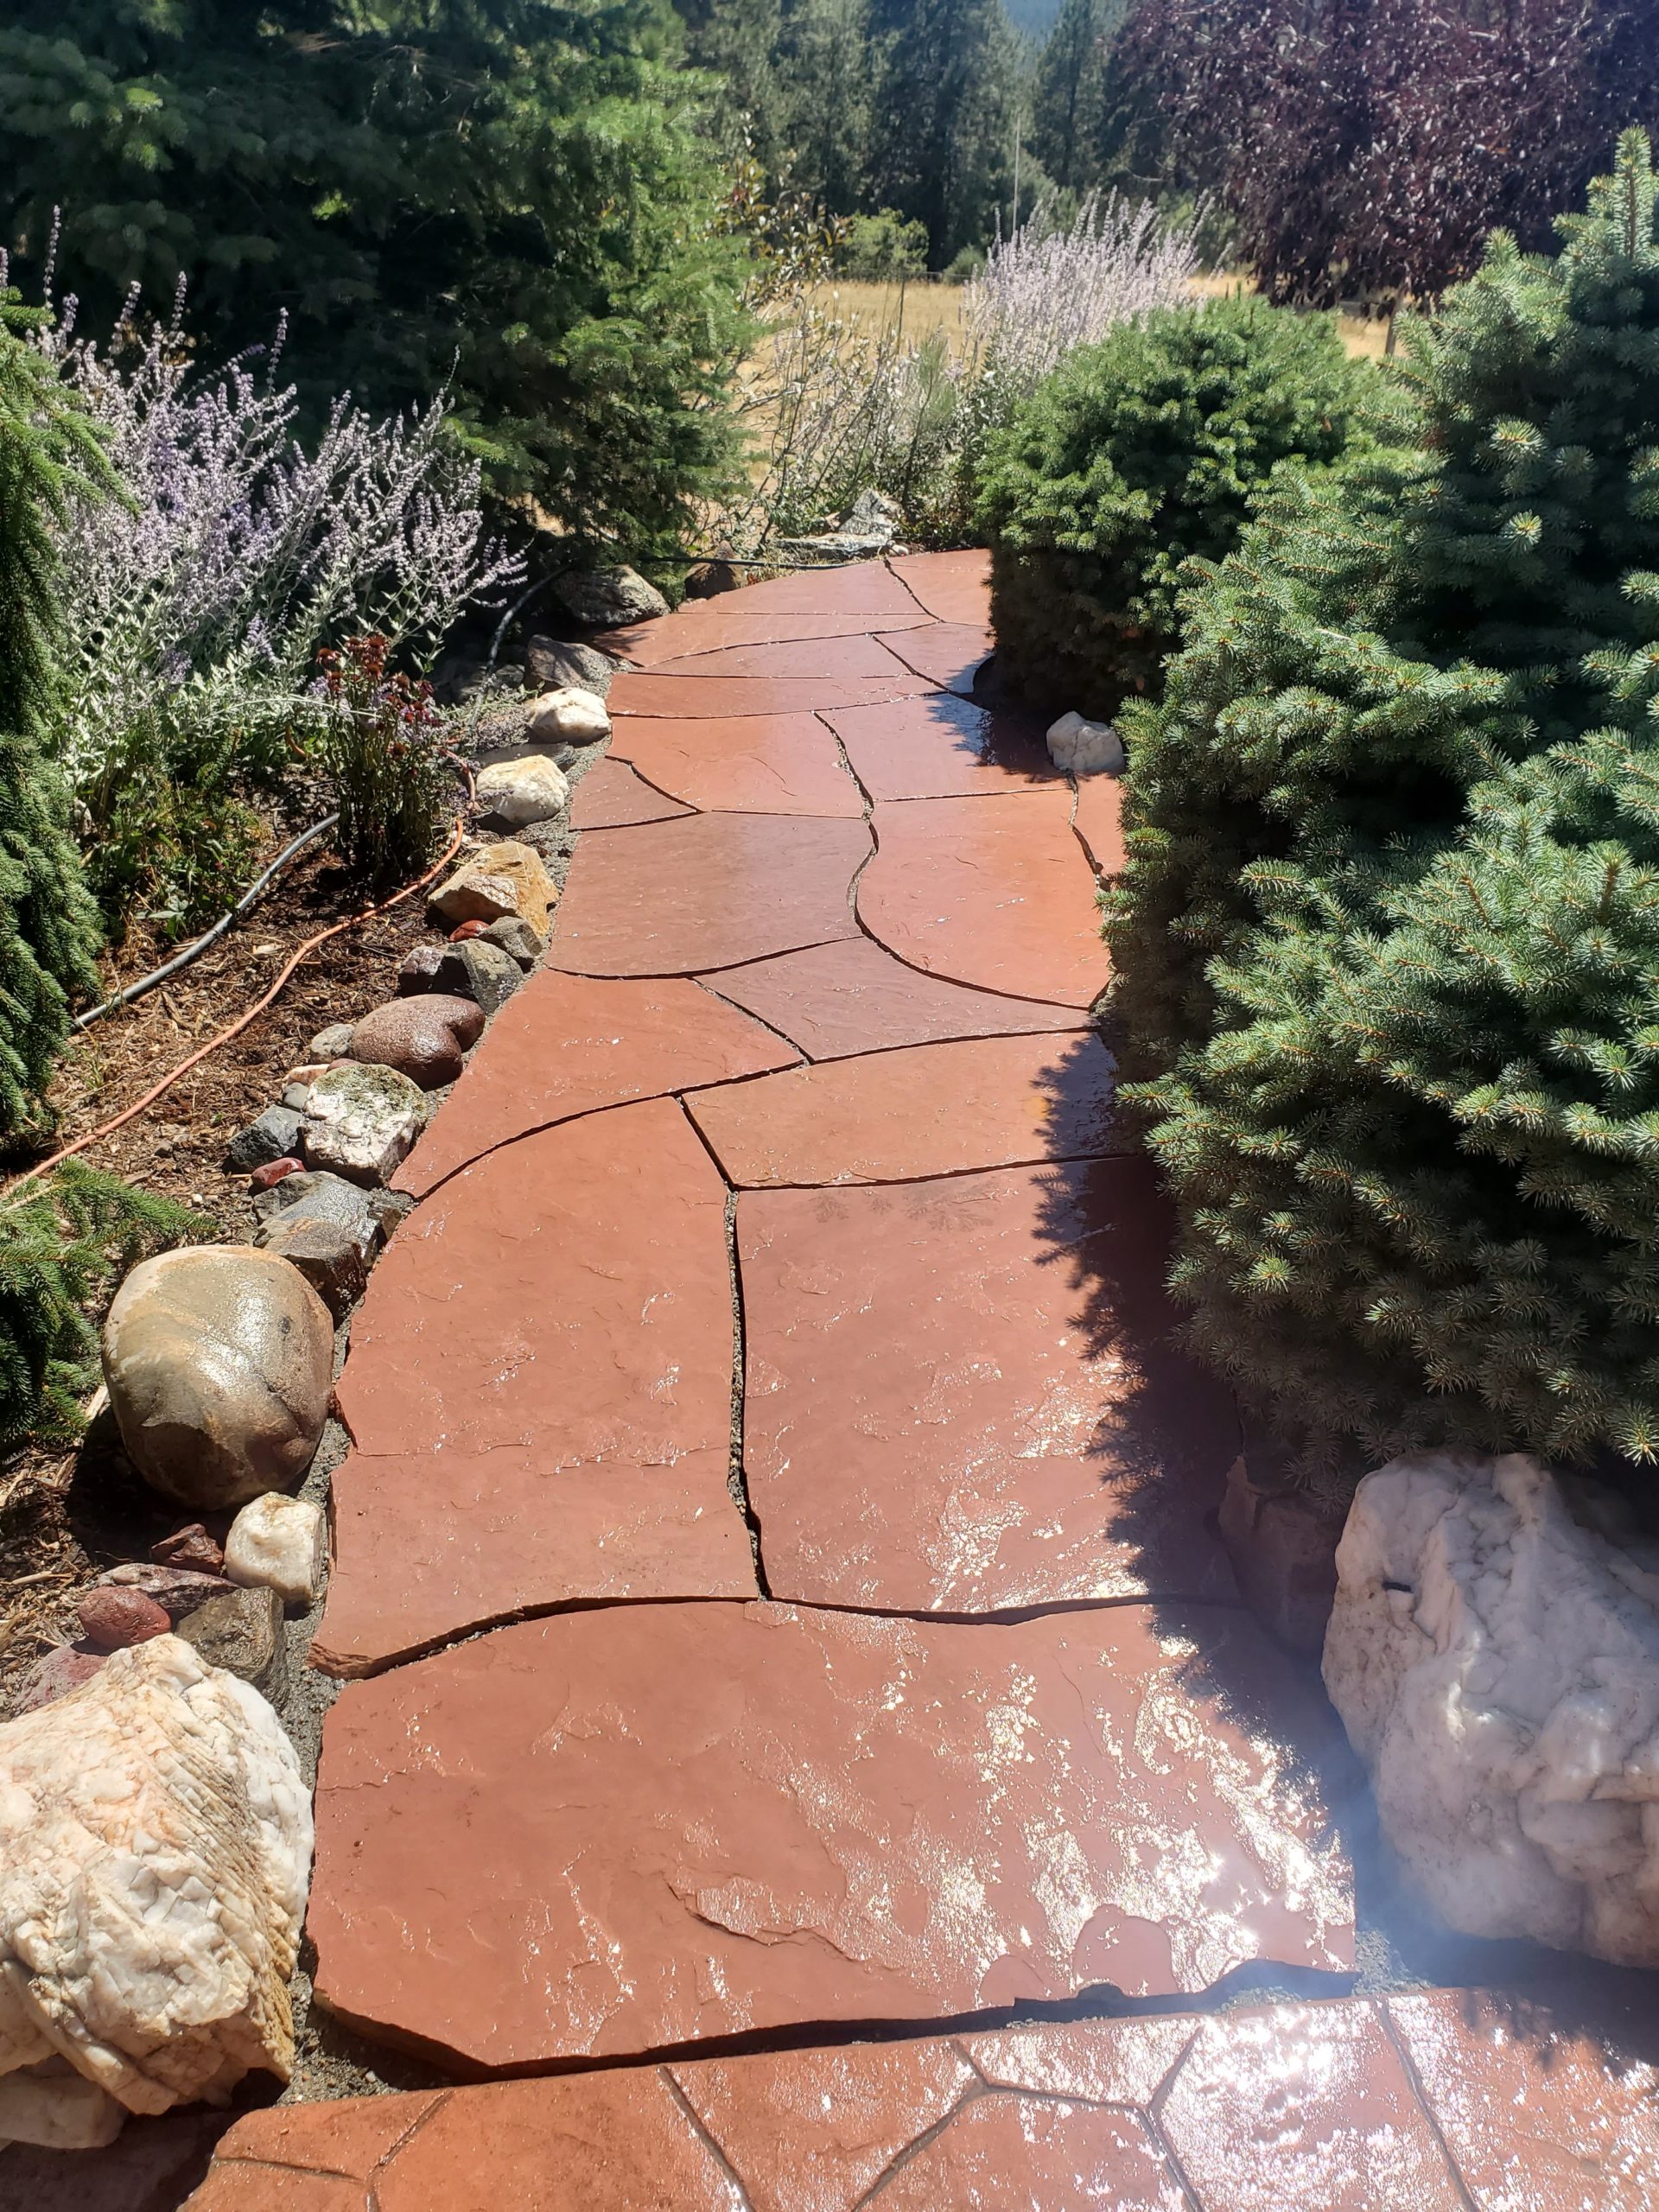 Winding path made of red rock through garden